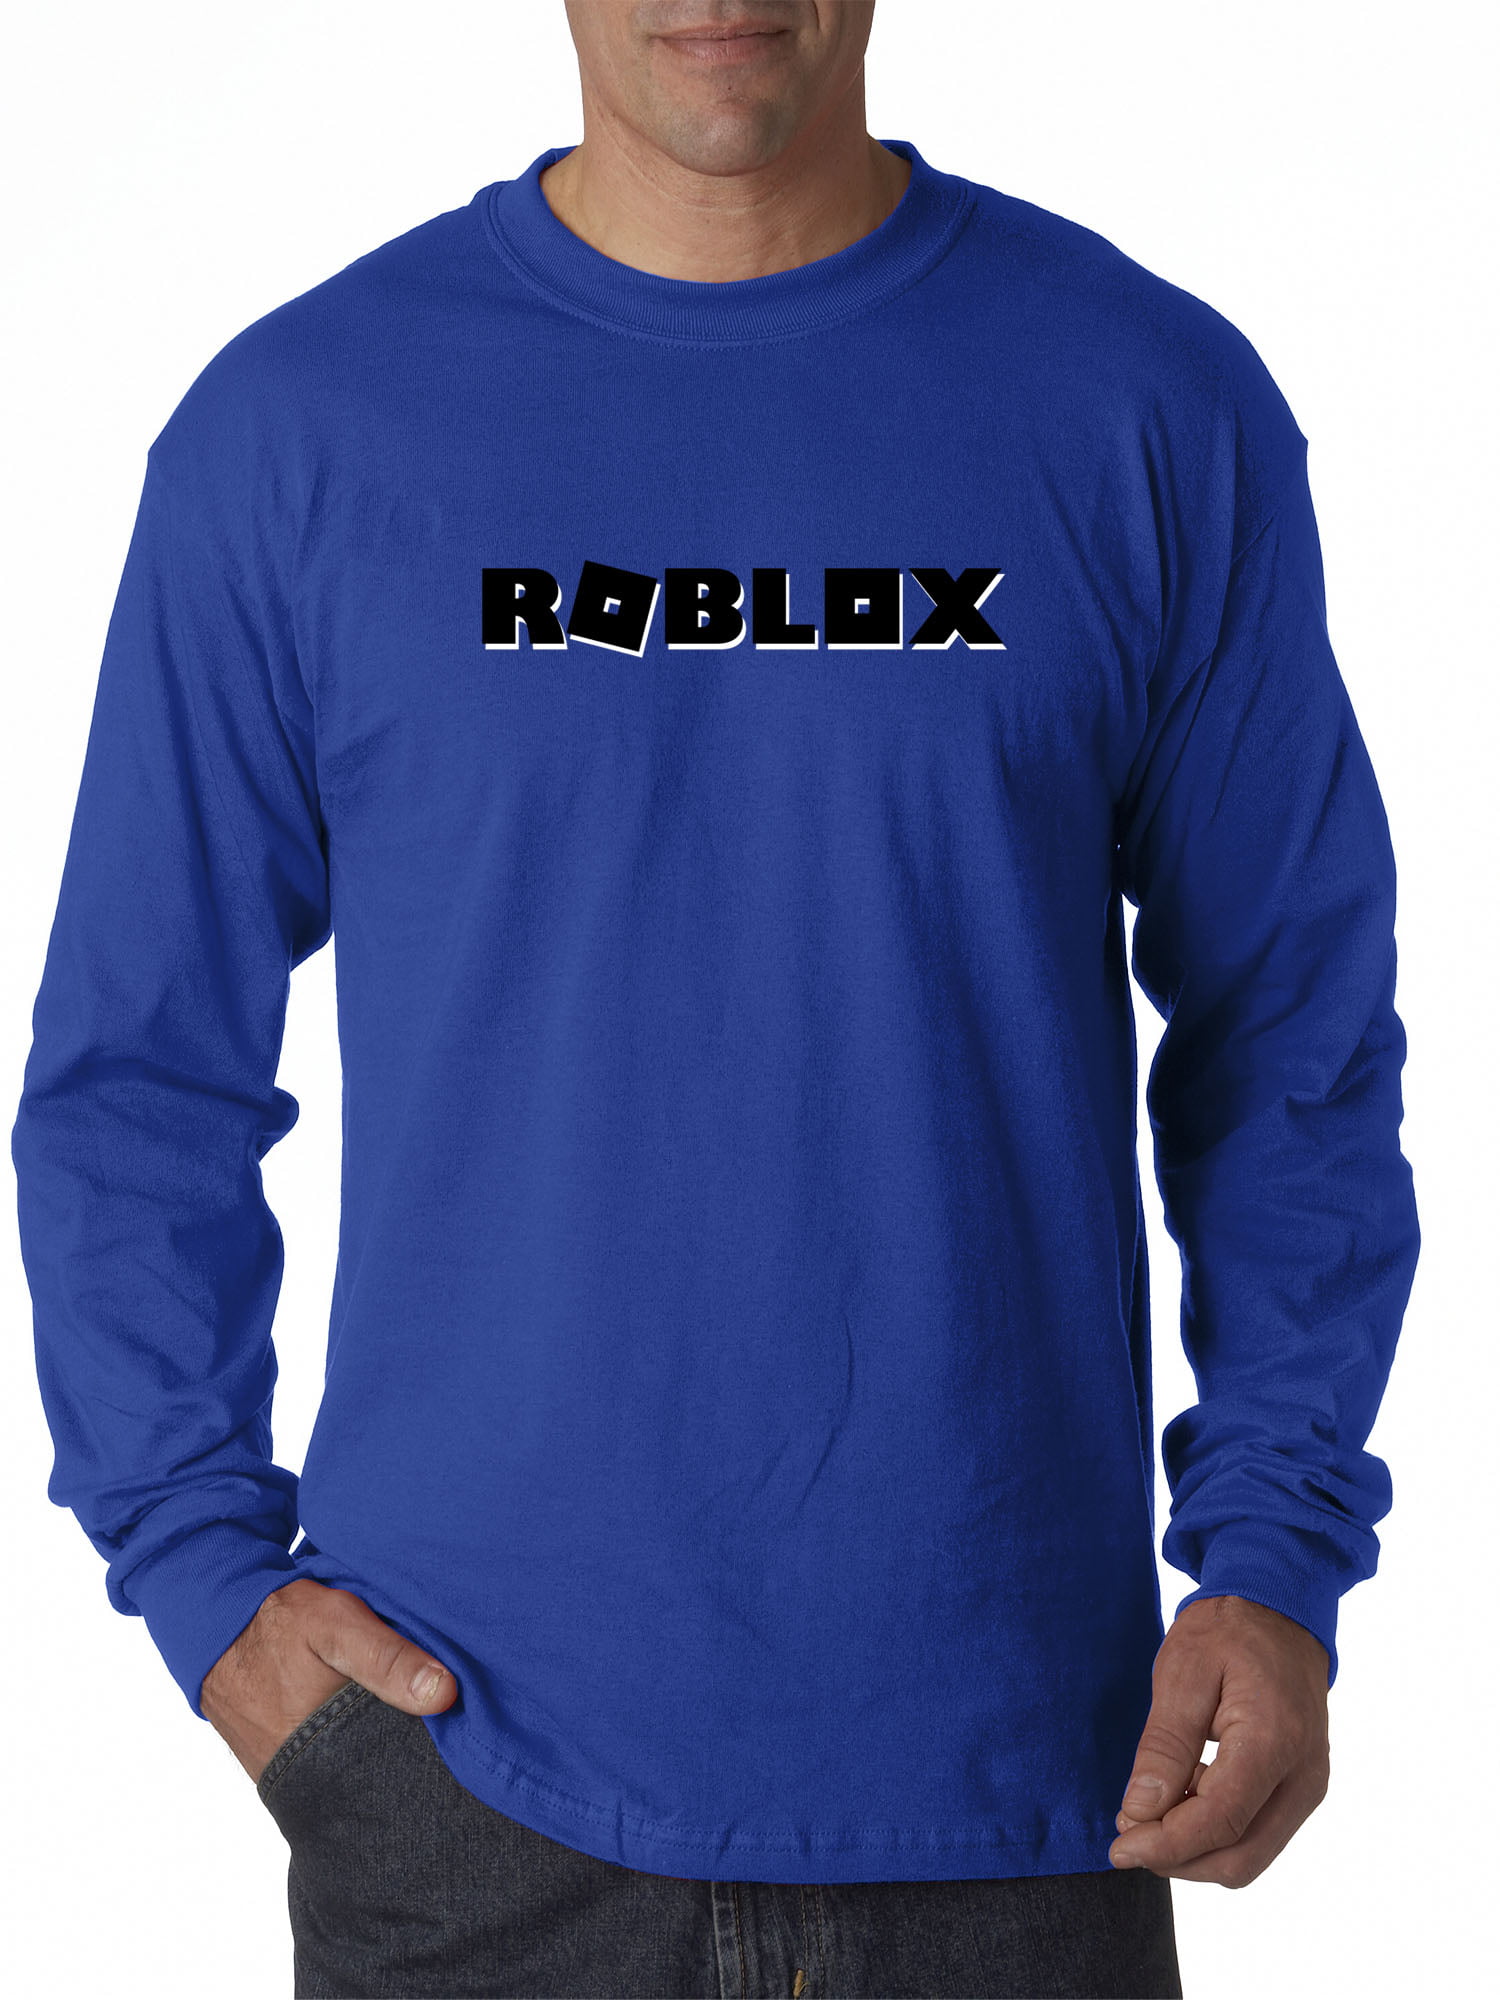 Trendy Usa Trendy Usa 1168 Unisex Long Sleeve T Shirt Roblox Block Logo Game Accent Small Royal Blue Walmart Com Walmart Com - t shirt roblox nike fire